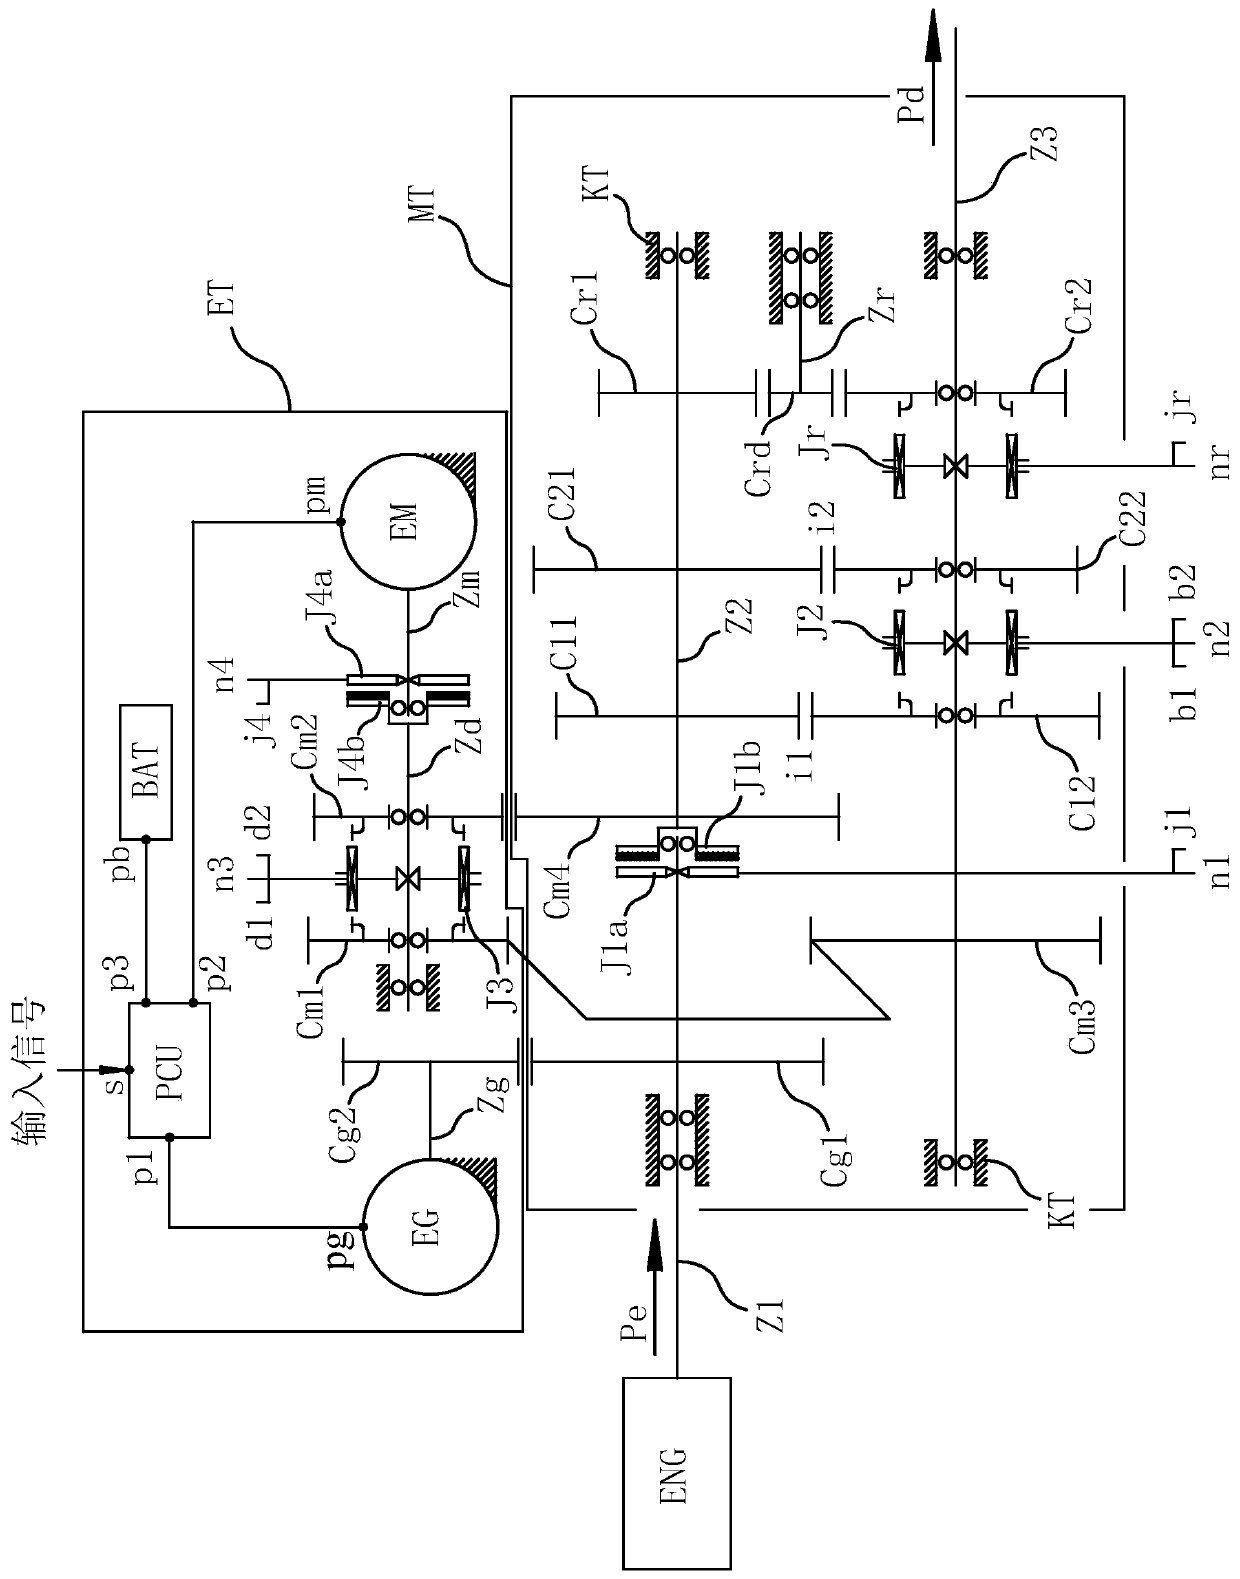 An electromechanical compound transmission device